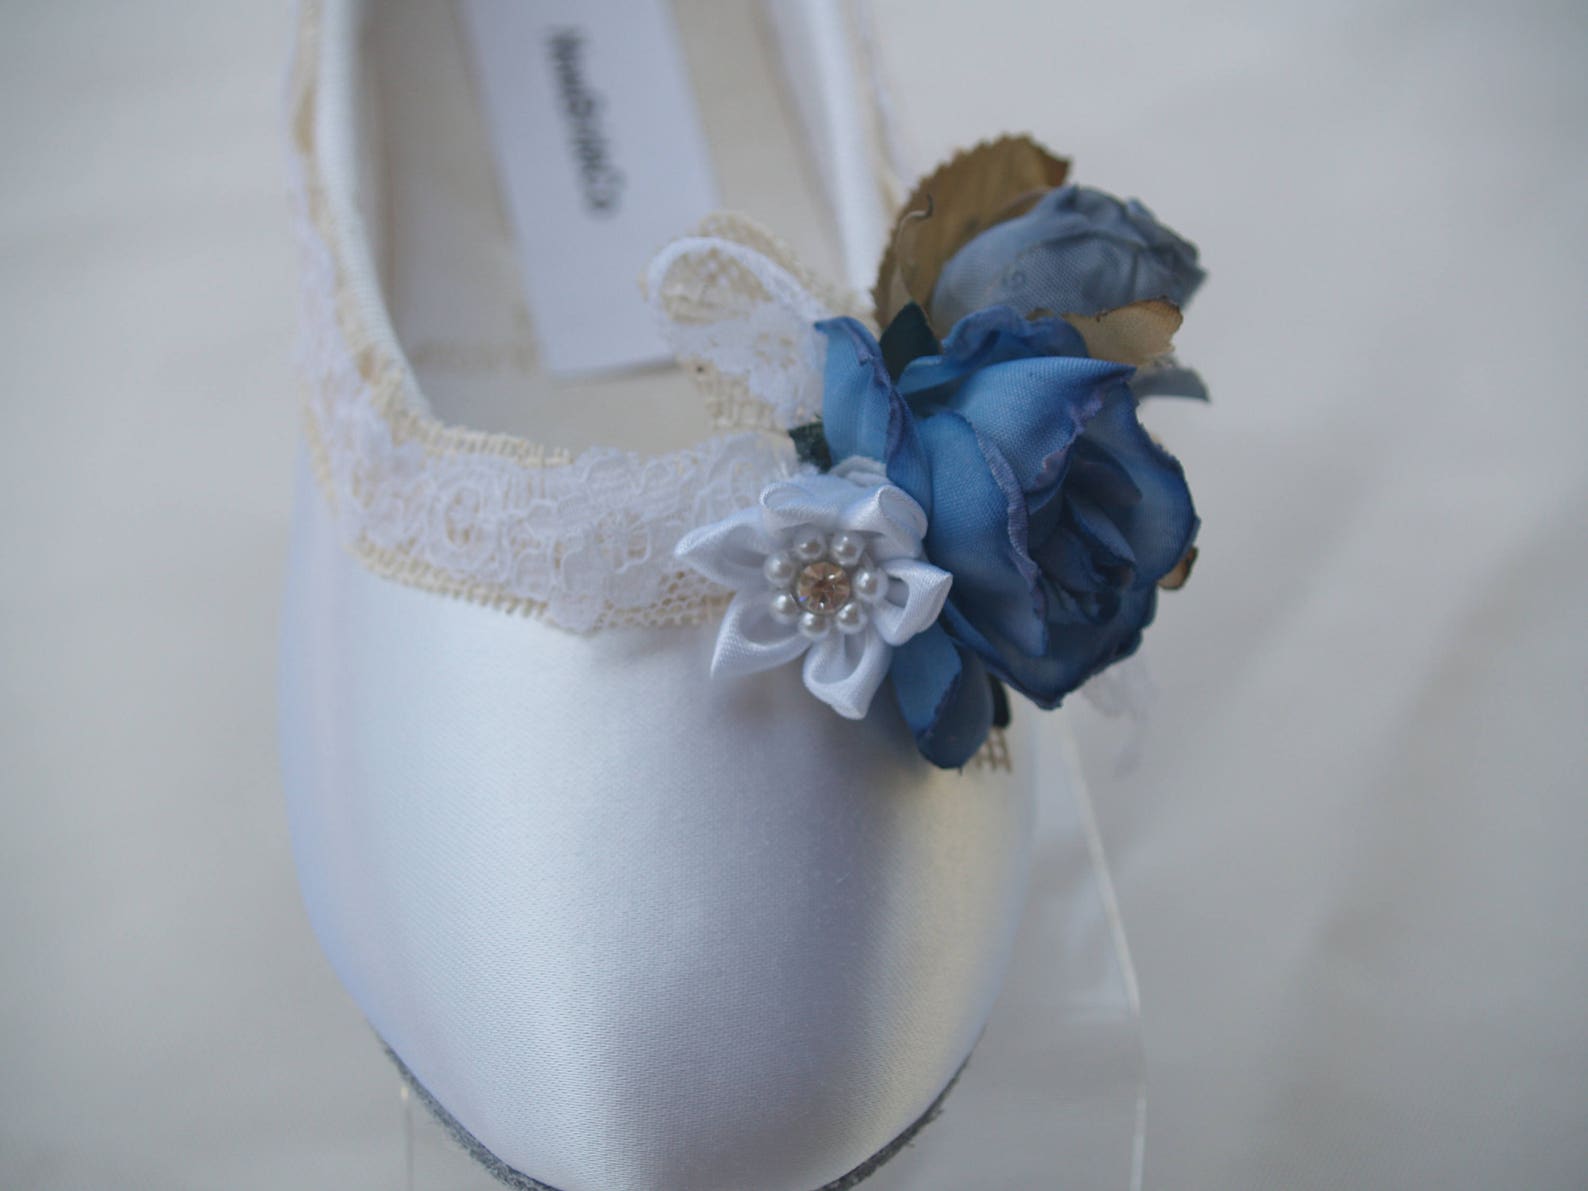 wedding flats blue flowers and burlap edging, ivory or white satin shoes, something blue wedding flats, lace up ribbon, ballet s